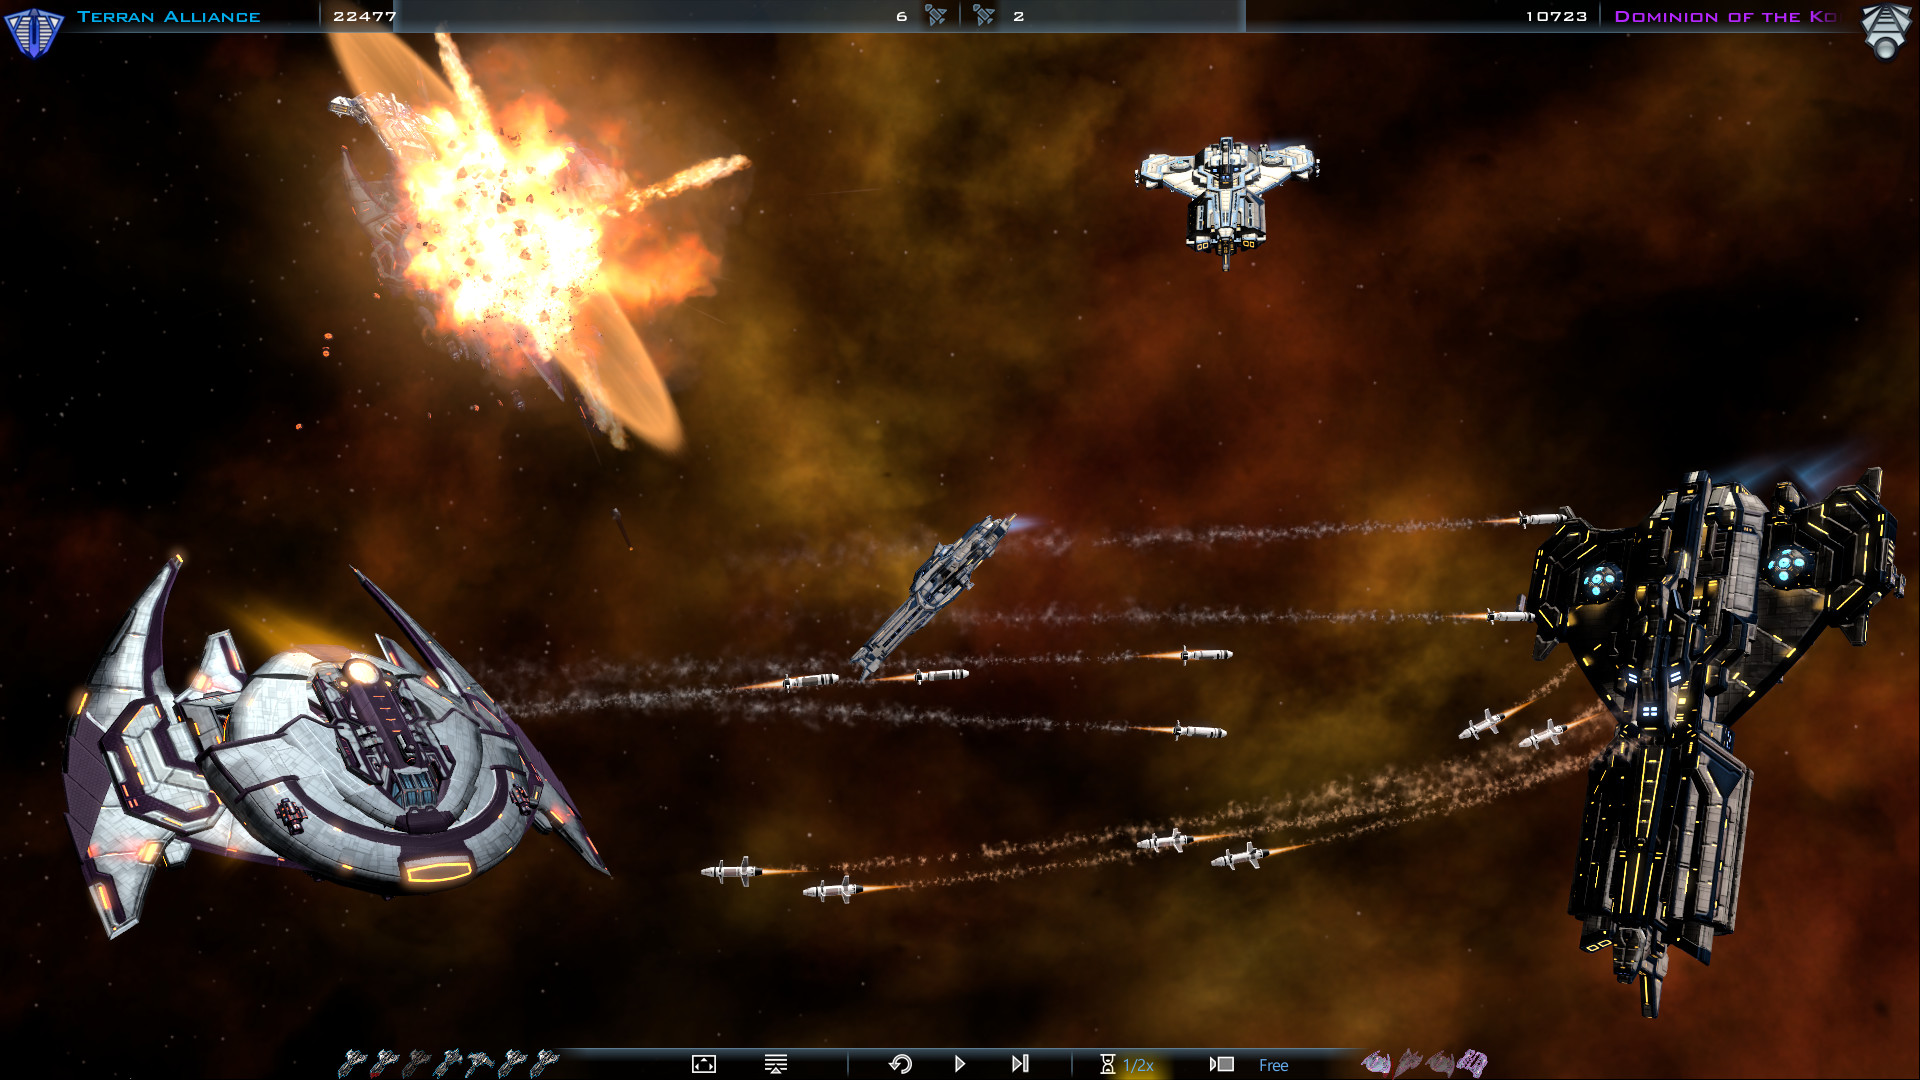 Galactic Civilizations III - Altarian Prophecy DLC Featured Screenshot #1